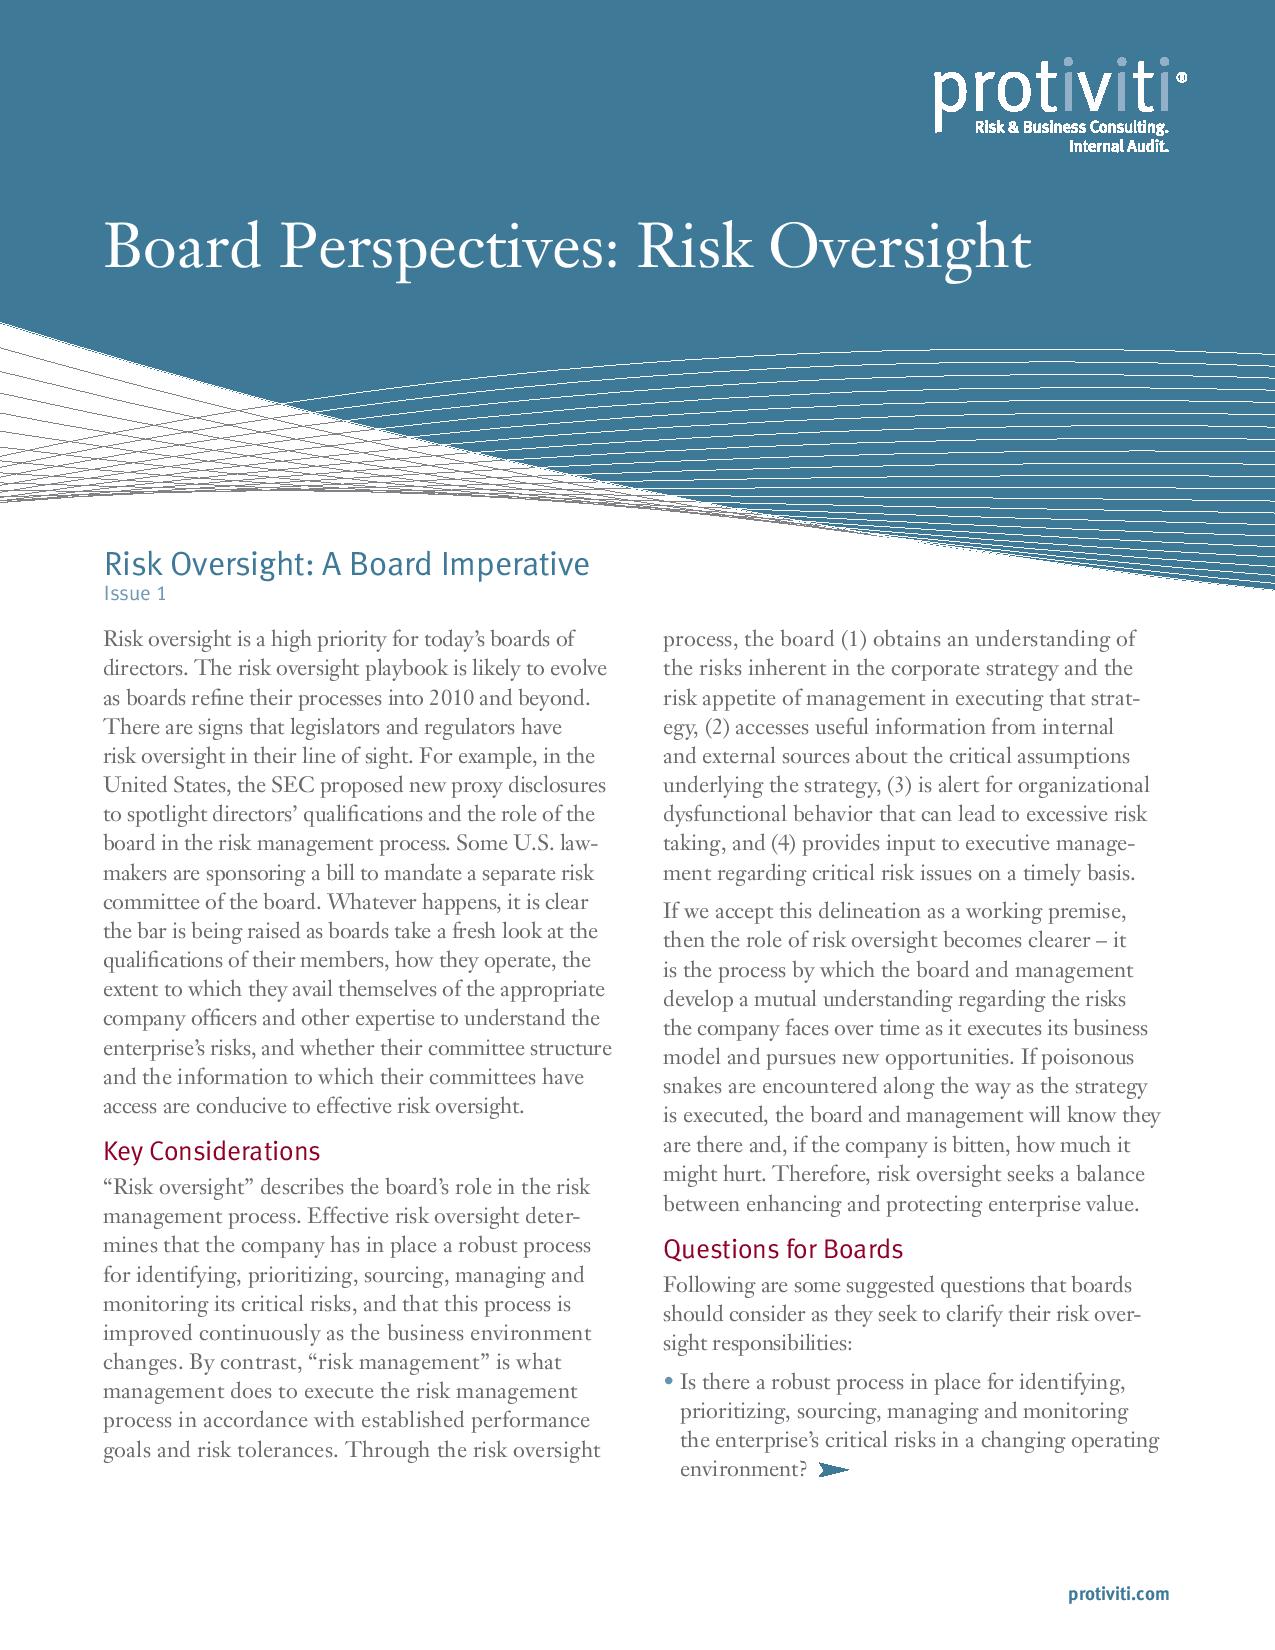 Risk Oversight: A Board Imperative